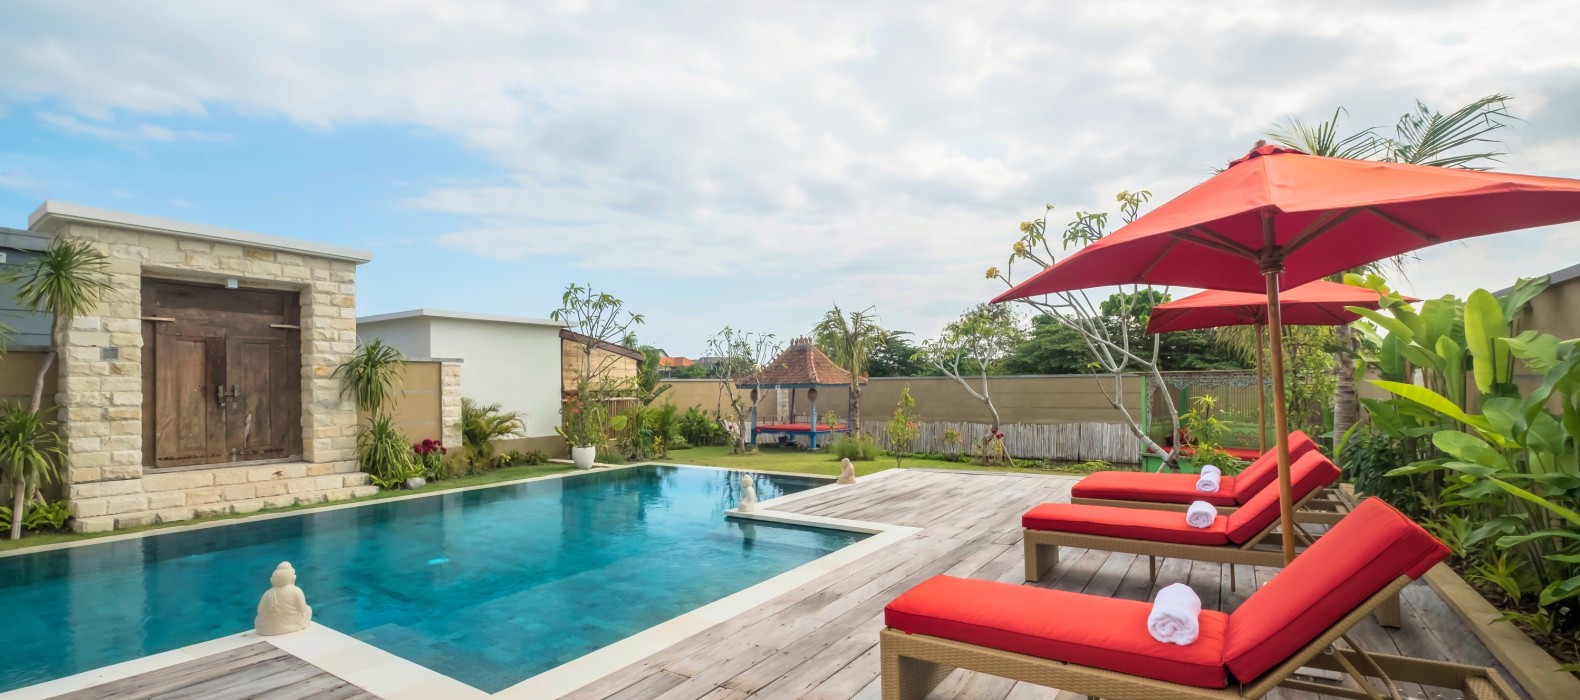 Exterior pool view of Villa Mambo in Bali